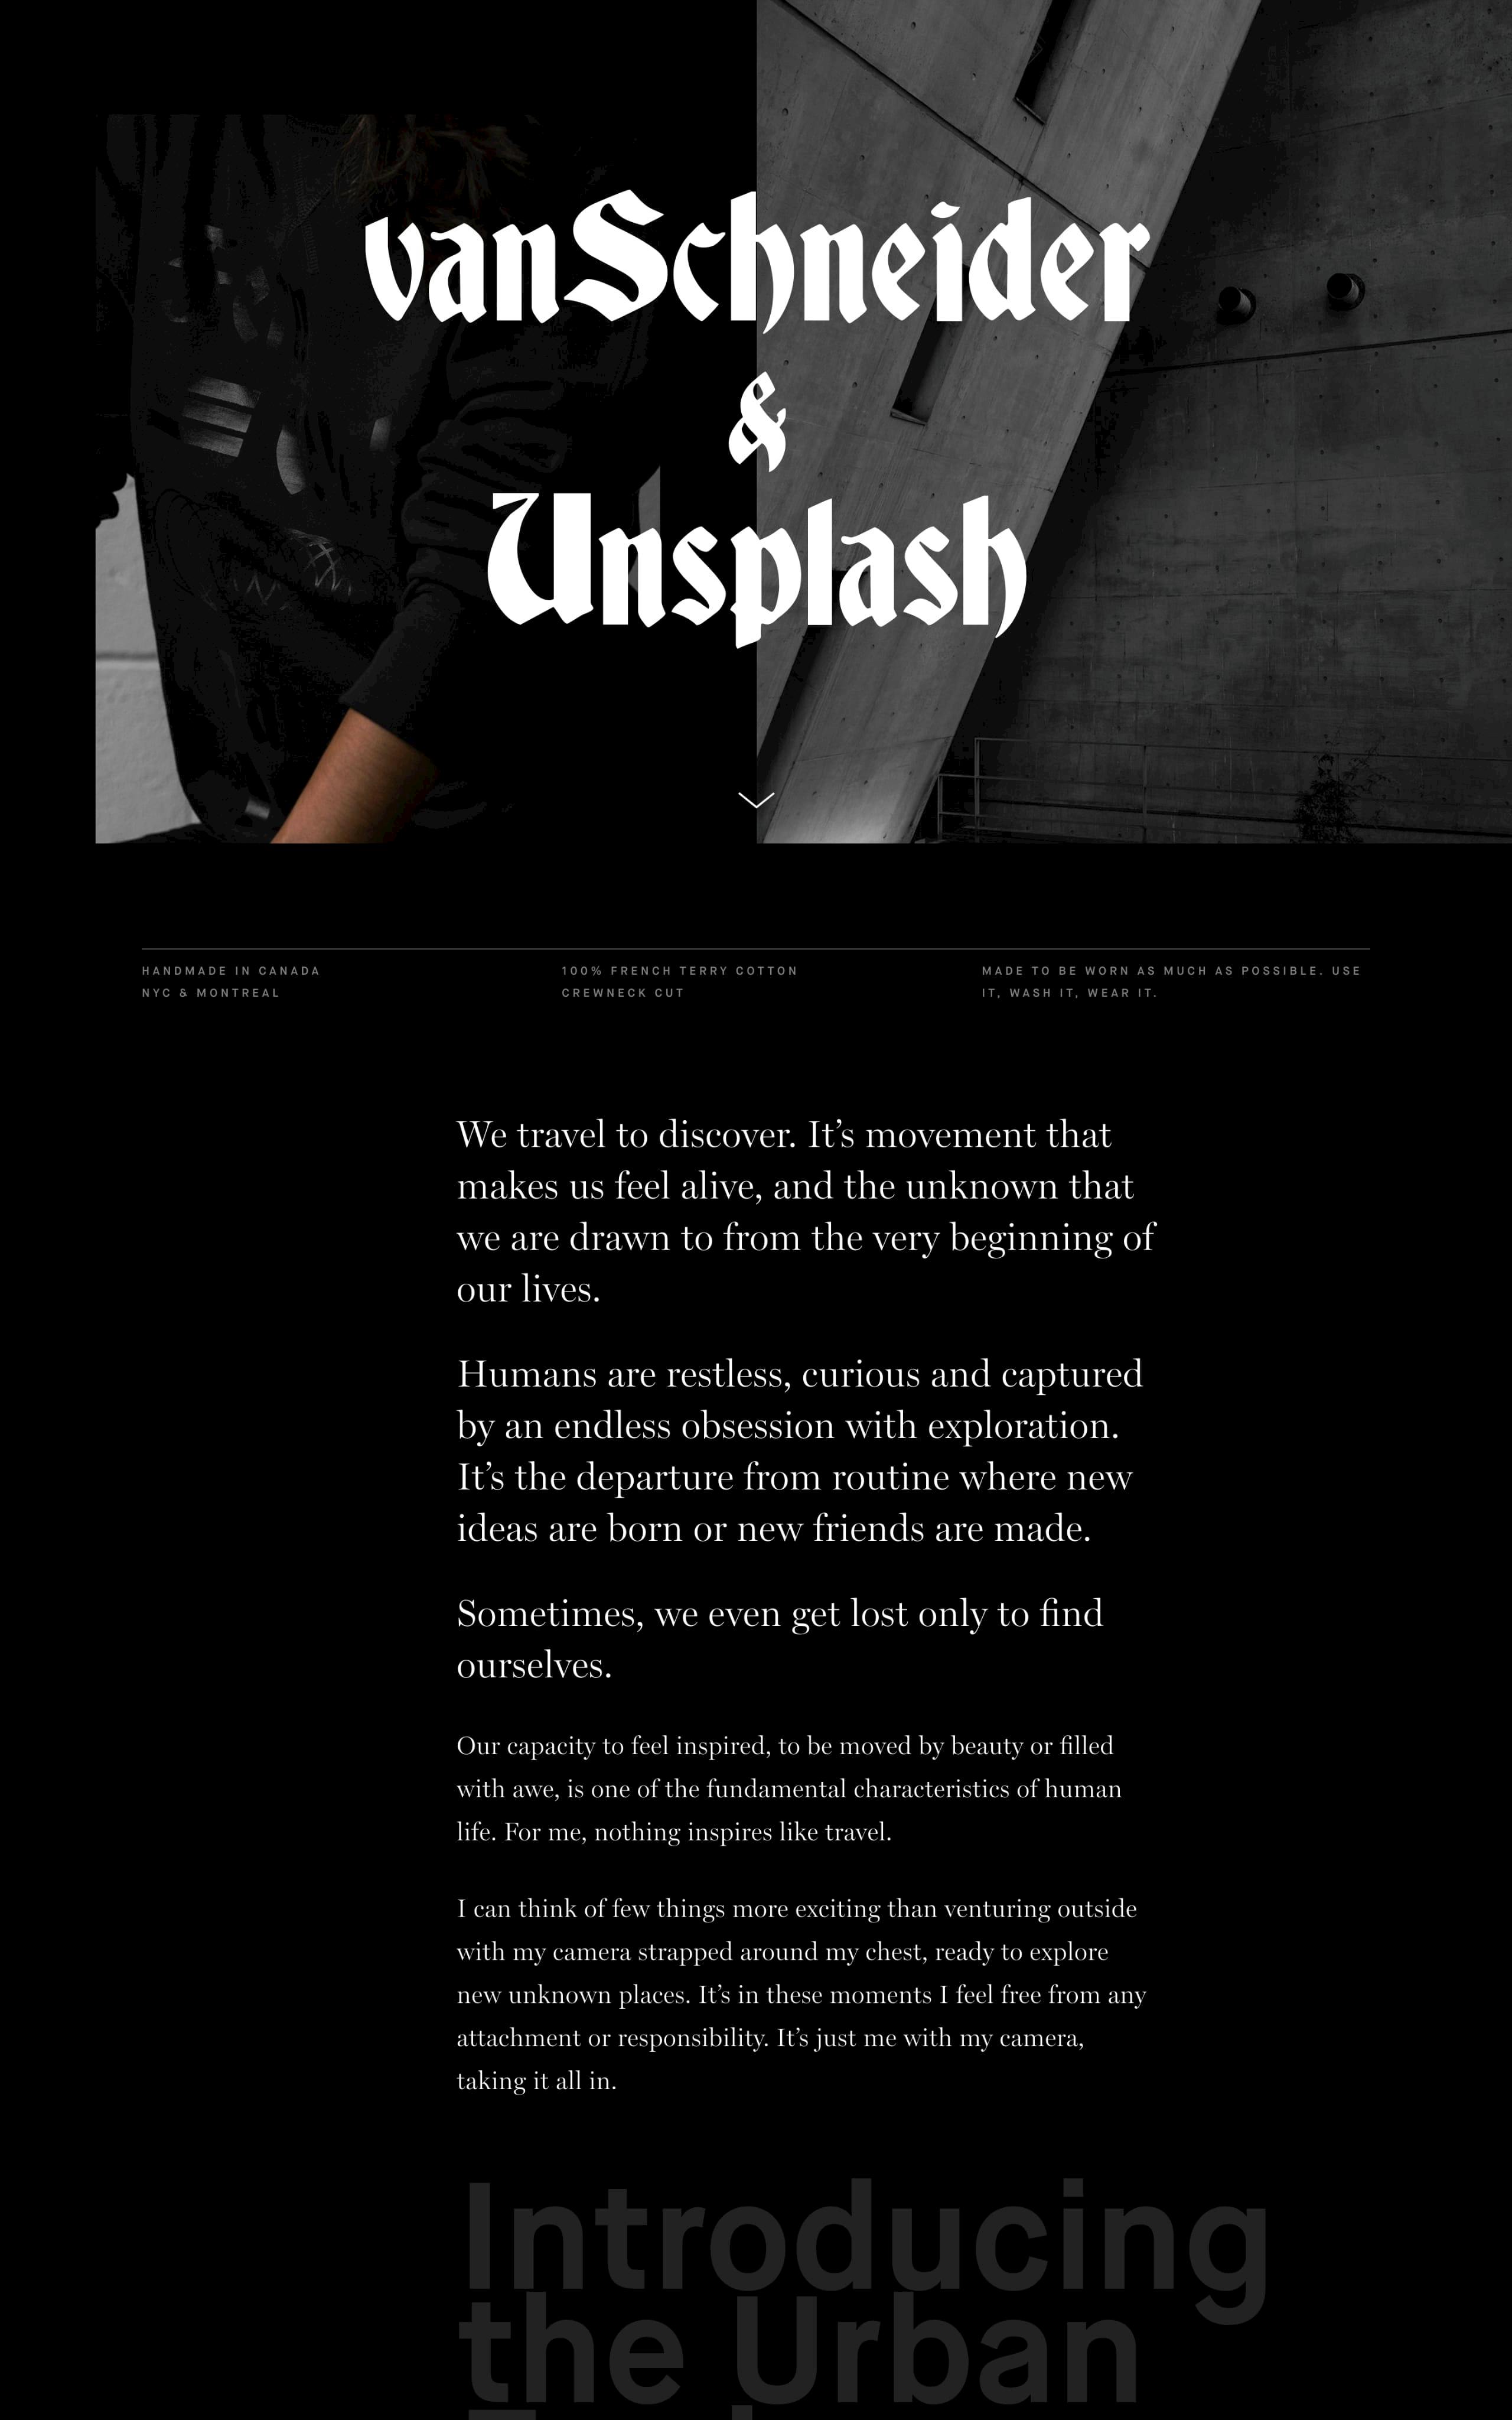 The Urban Explorer Sweatshirt Website Screenshot